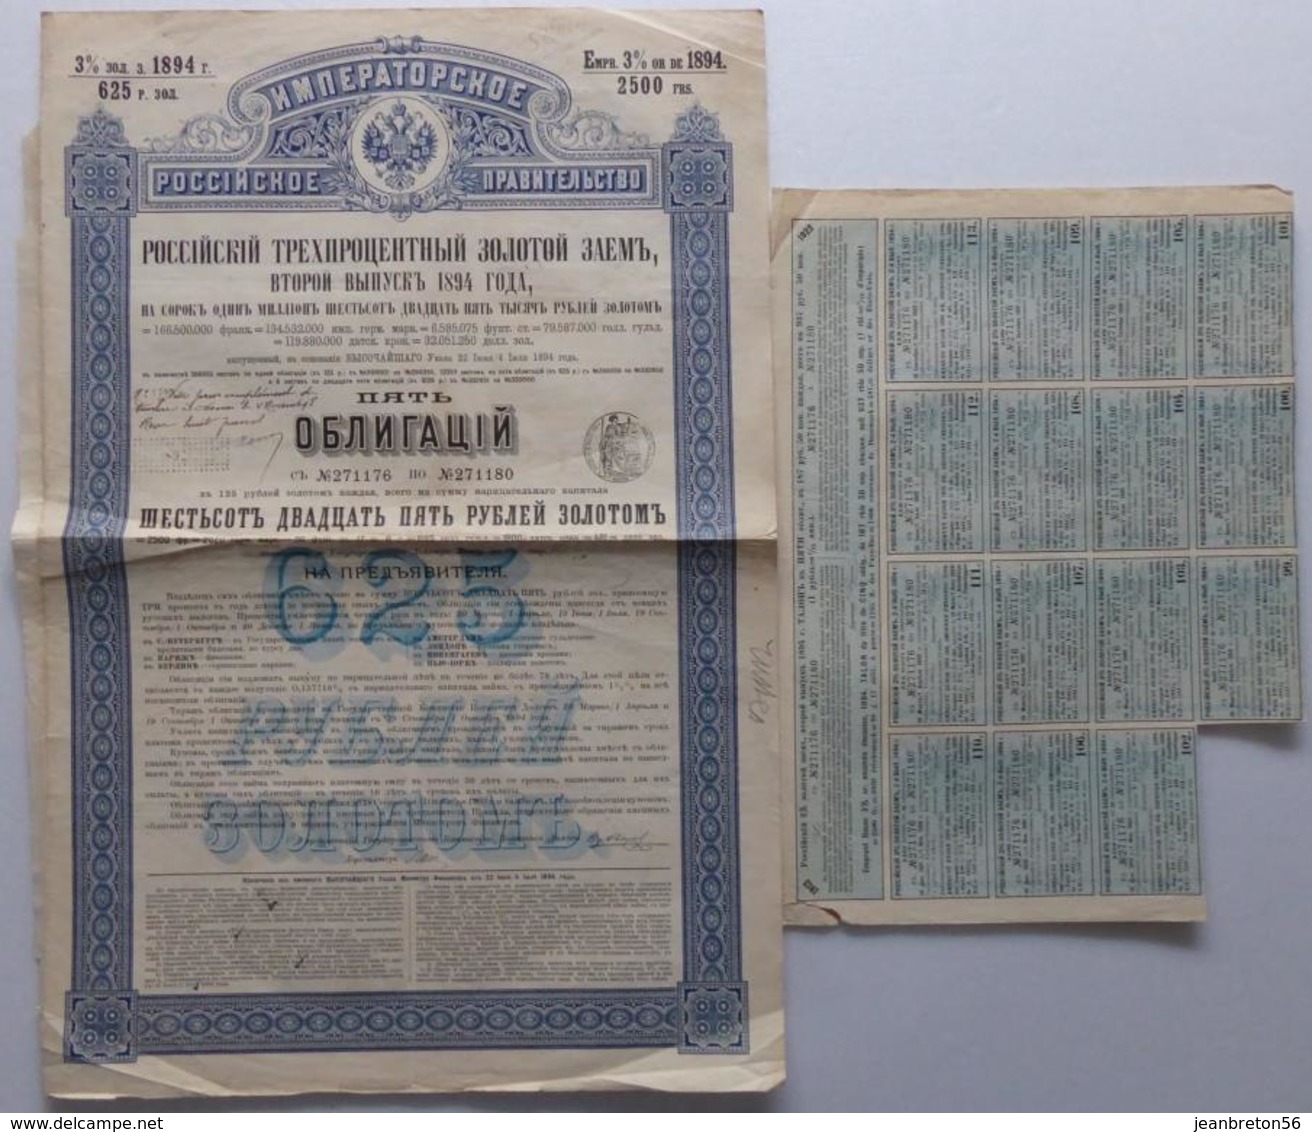 Emprunt Russe 3% Or - 1894 - Obligation De 500 Francs Avec Couipons - Russie